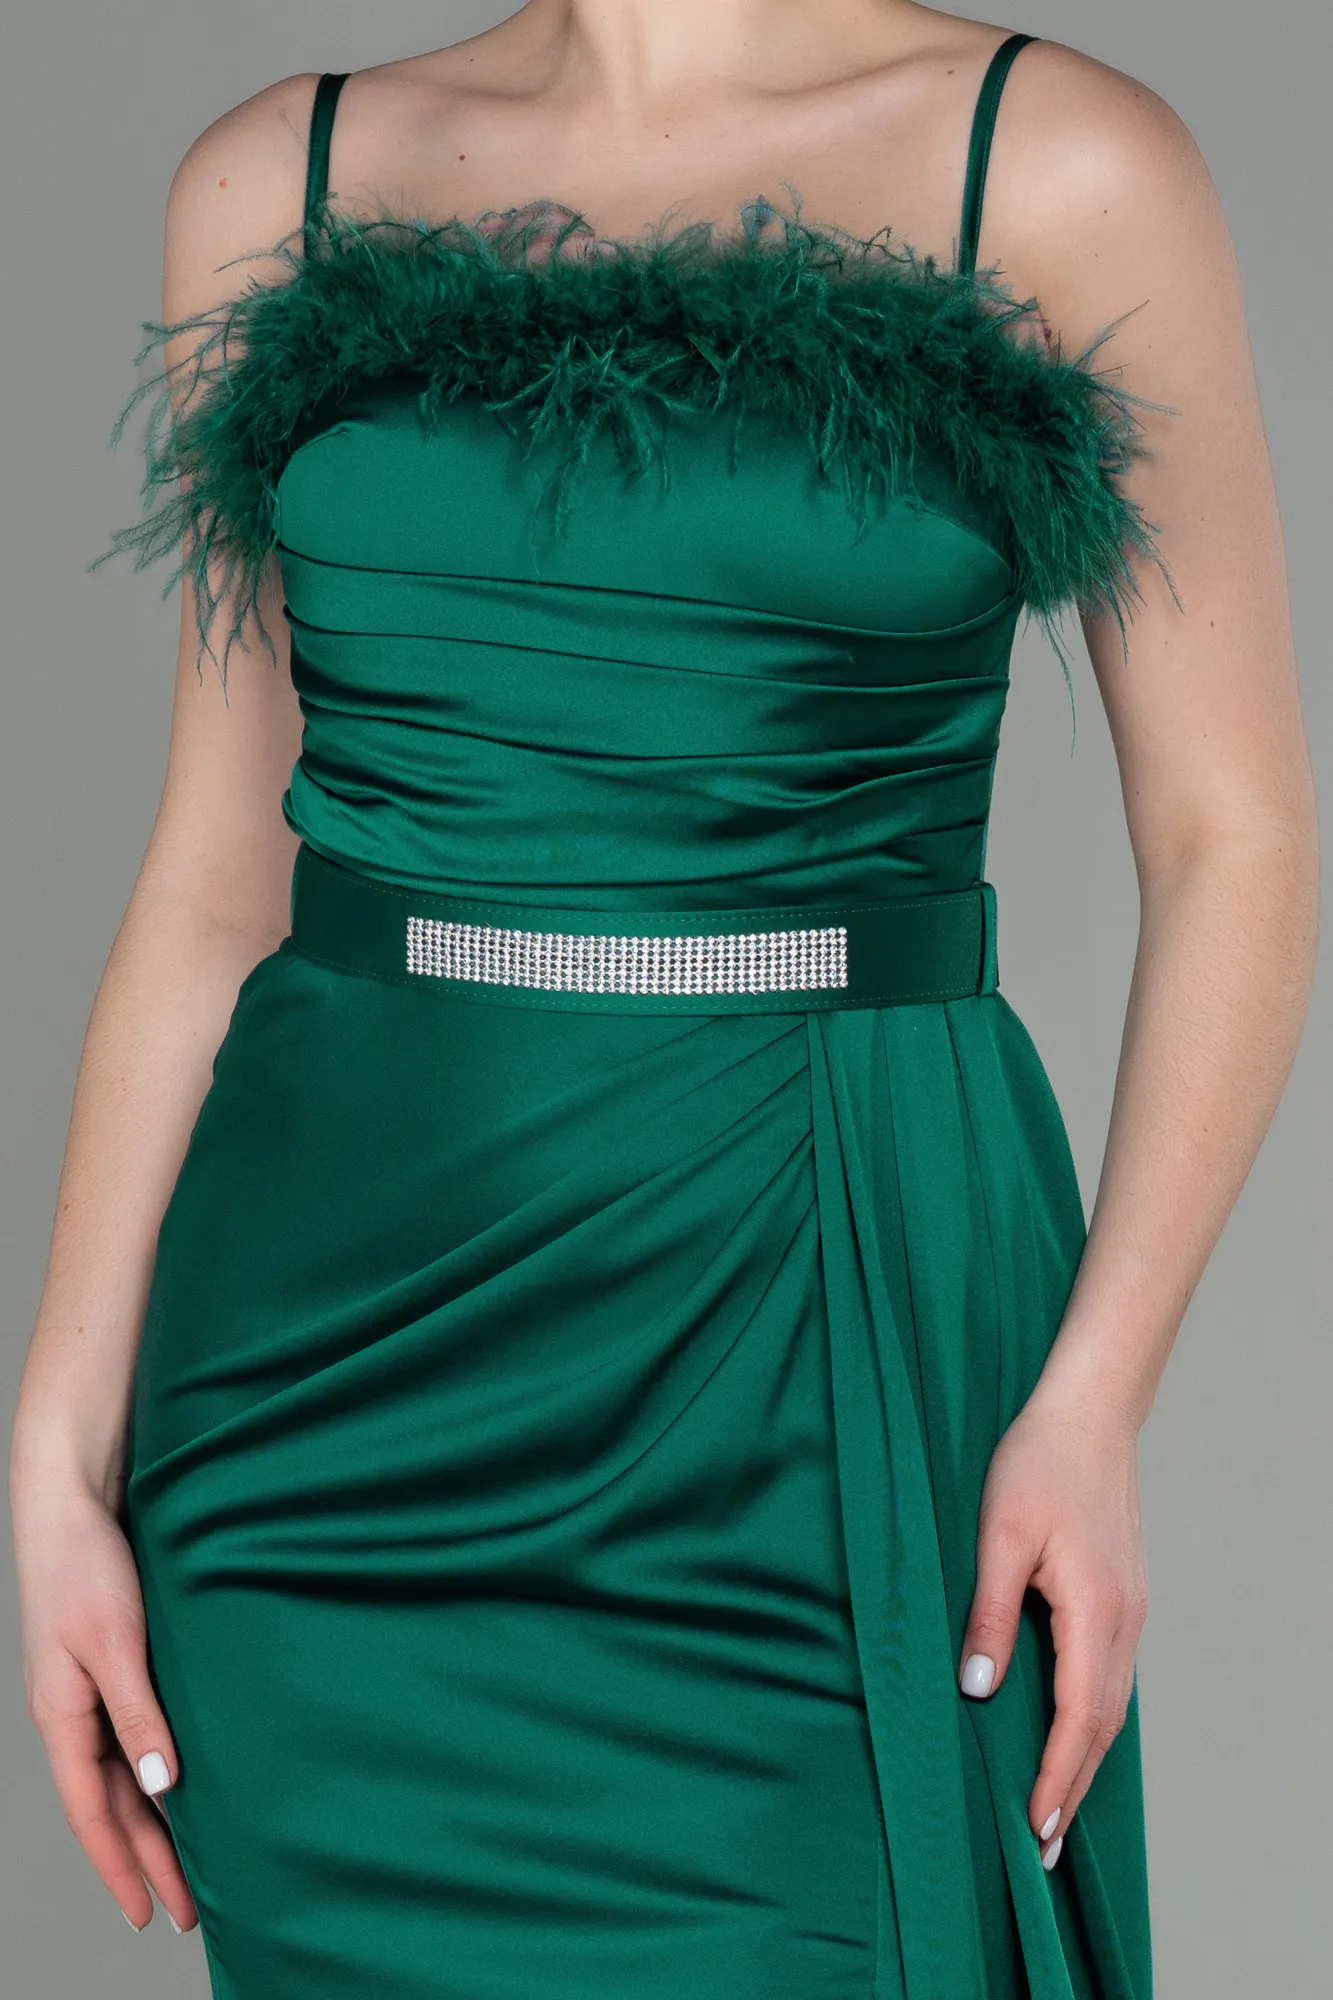 Emerald Green-Long Satin Evening Dress ABU2939